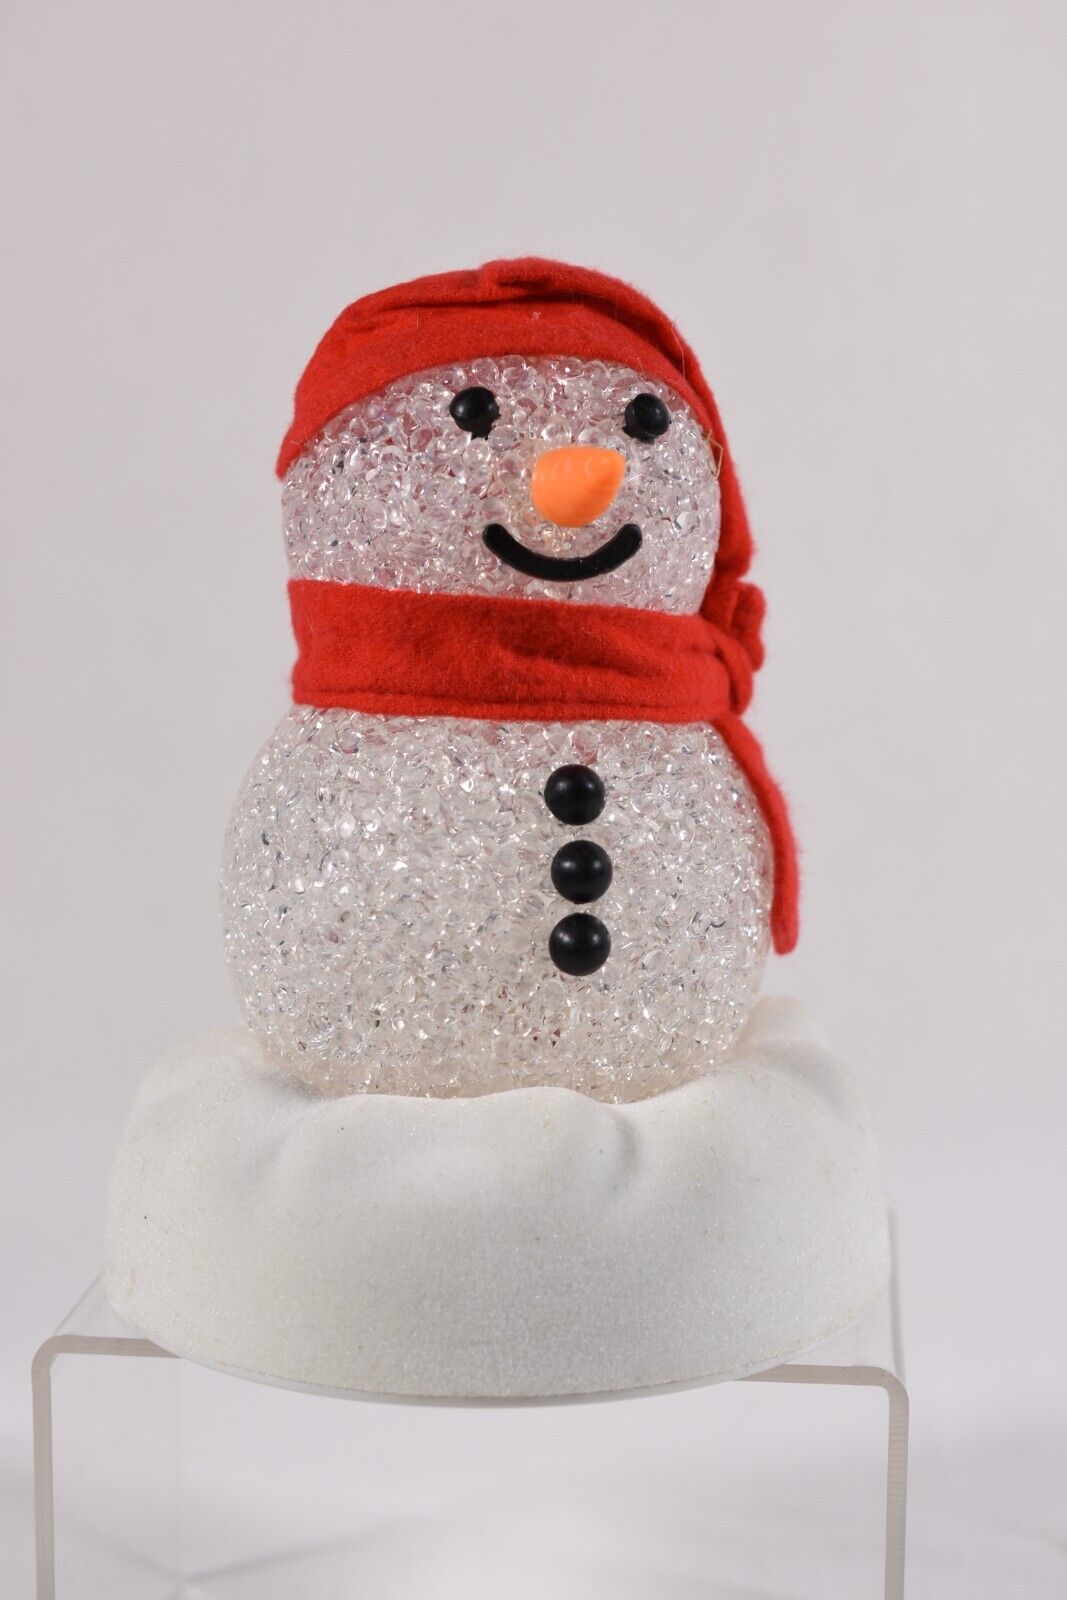 Vintage Avon Little Chilly Light Up Snowman Kid -Avon Gift Collection NO BOX